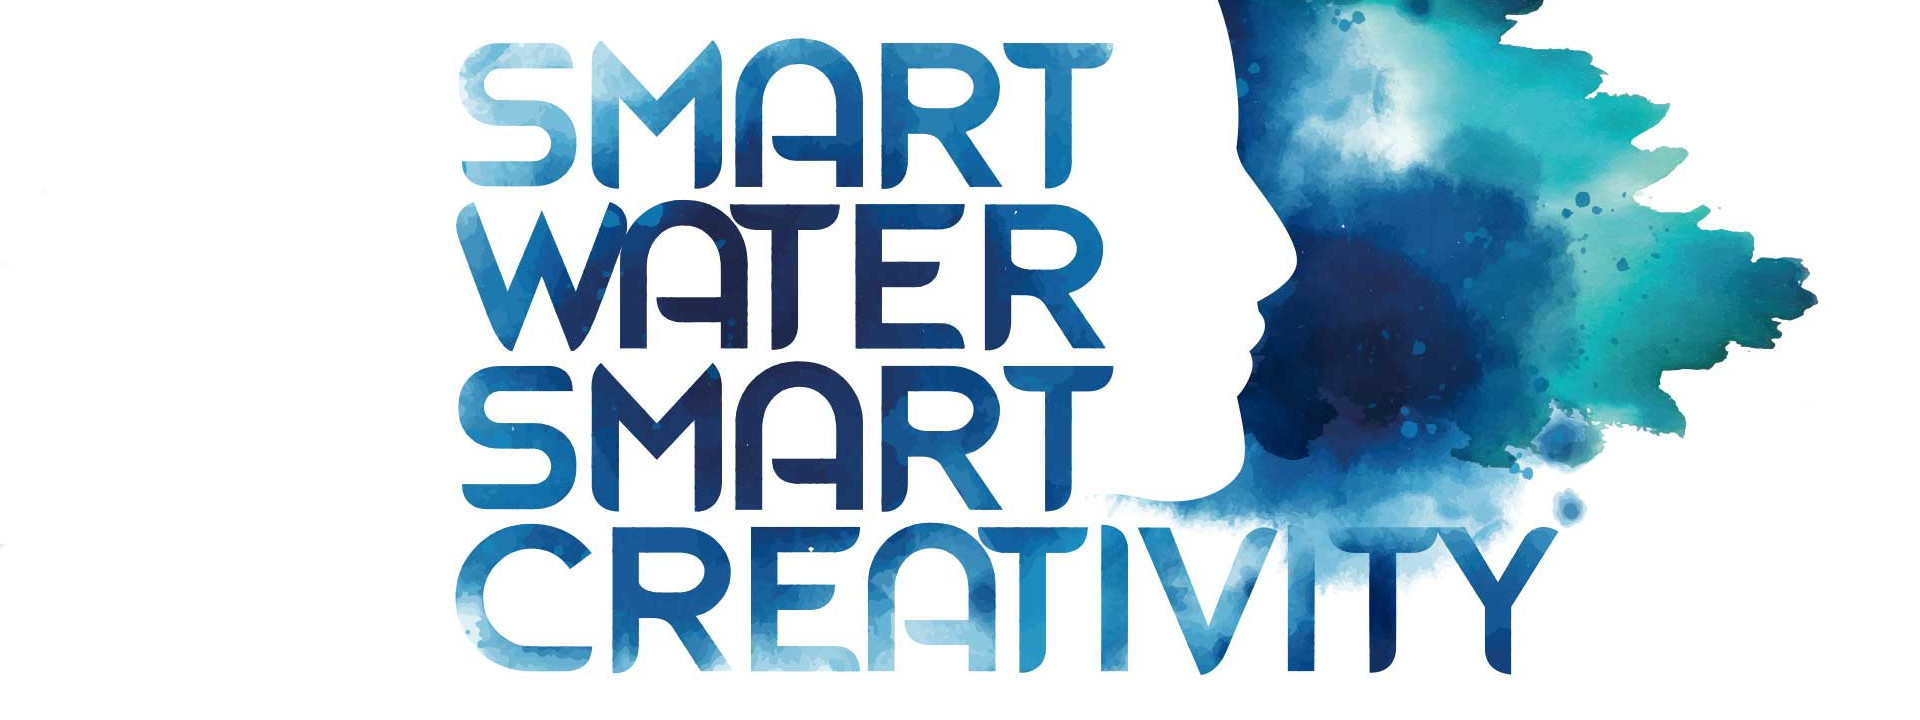 Smart Water, Smart (collective) Creativity